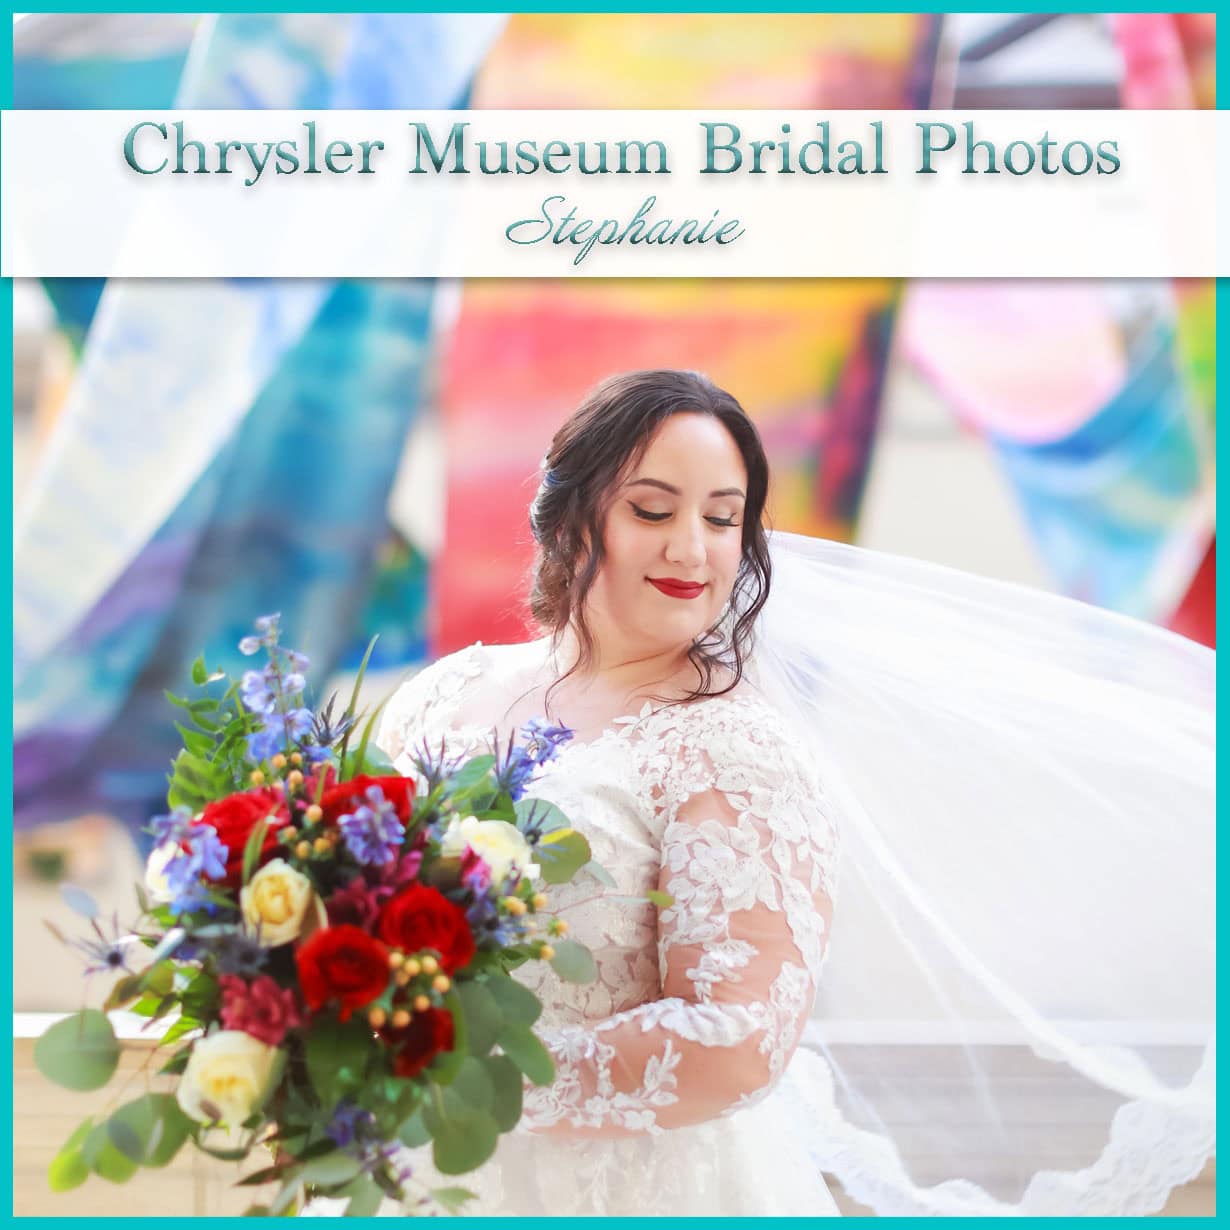 Chrysler Museum Bridal Photos